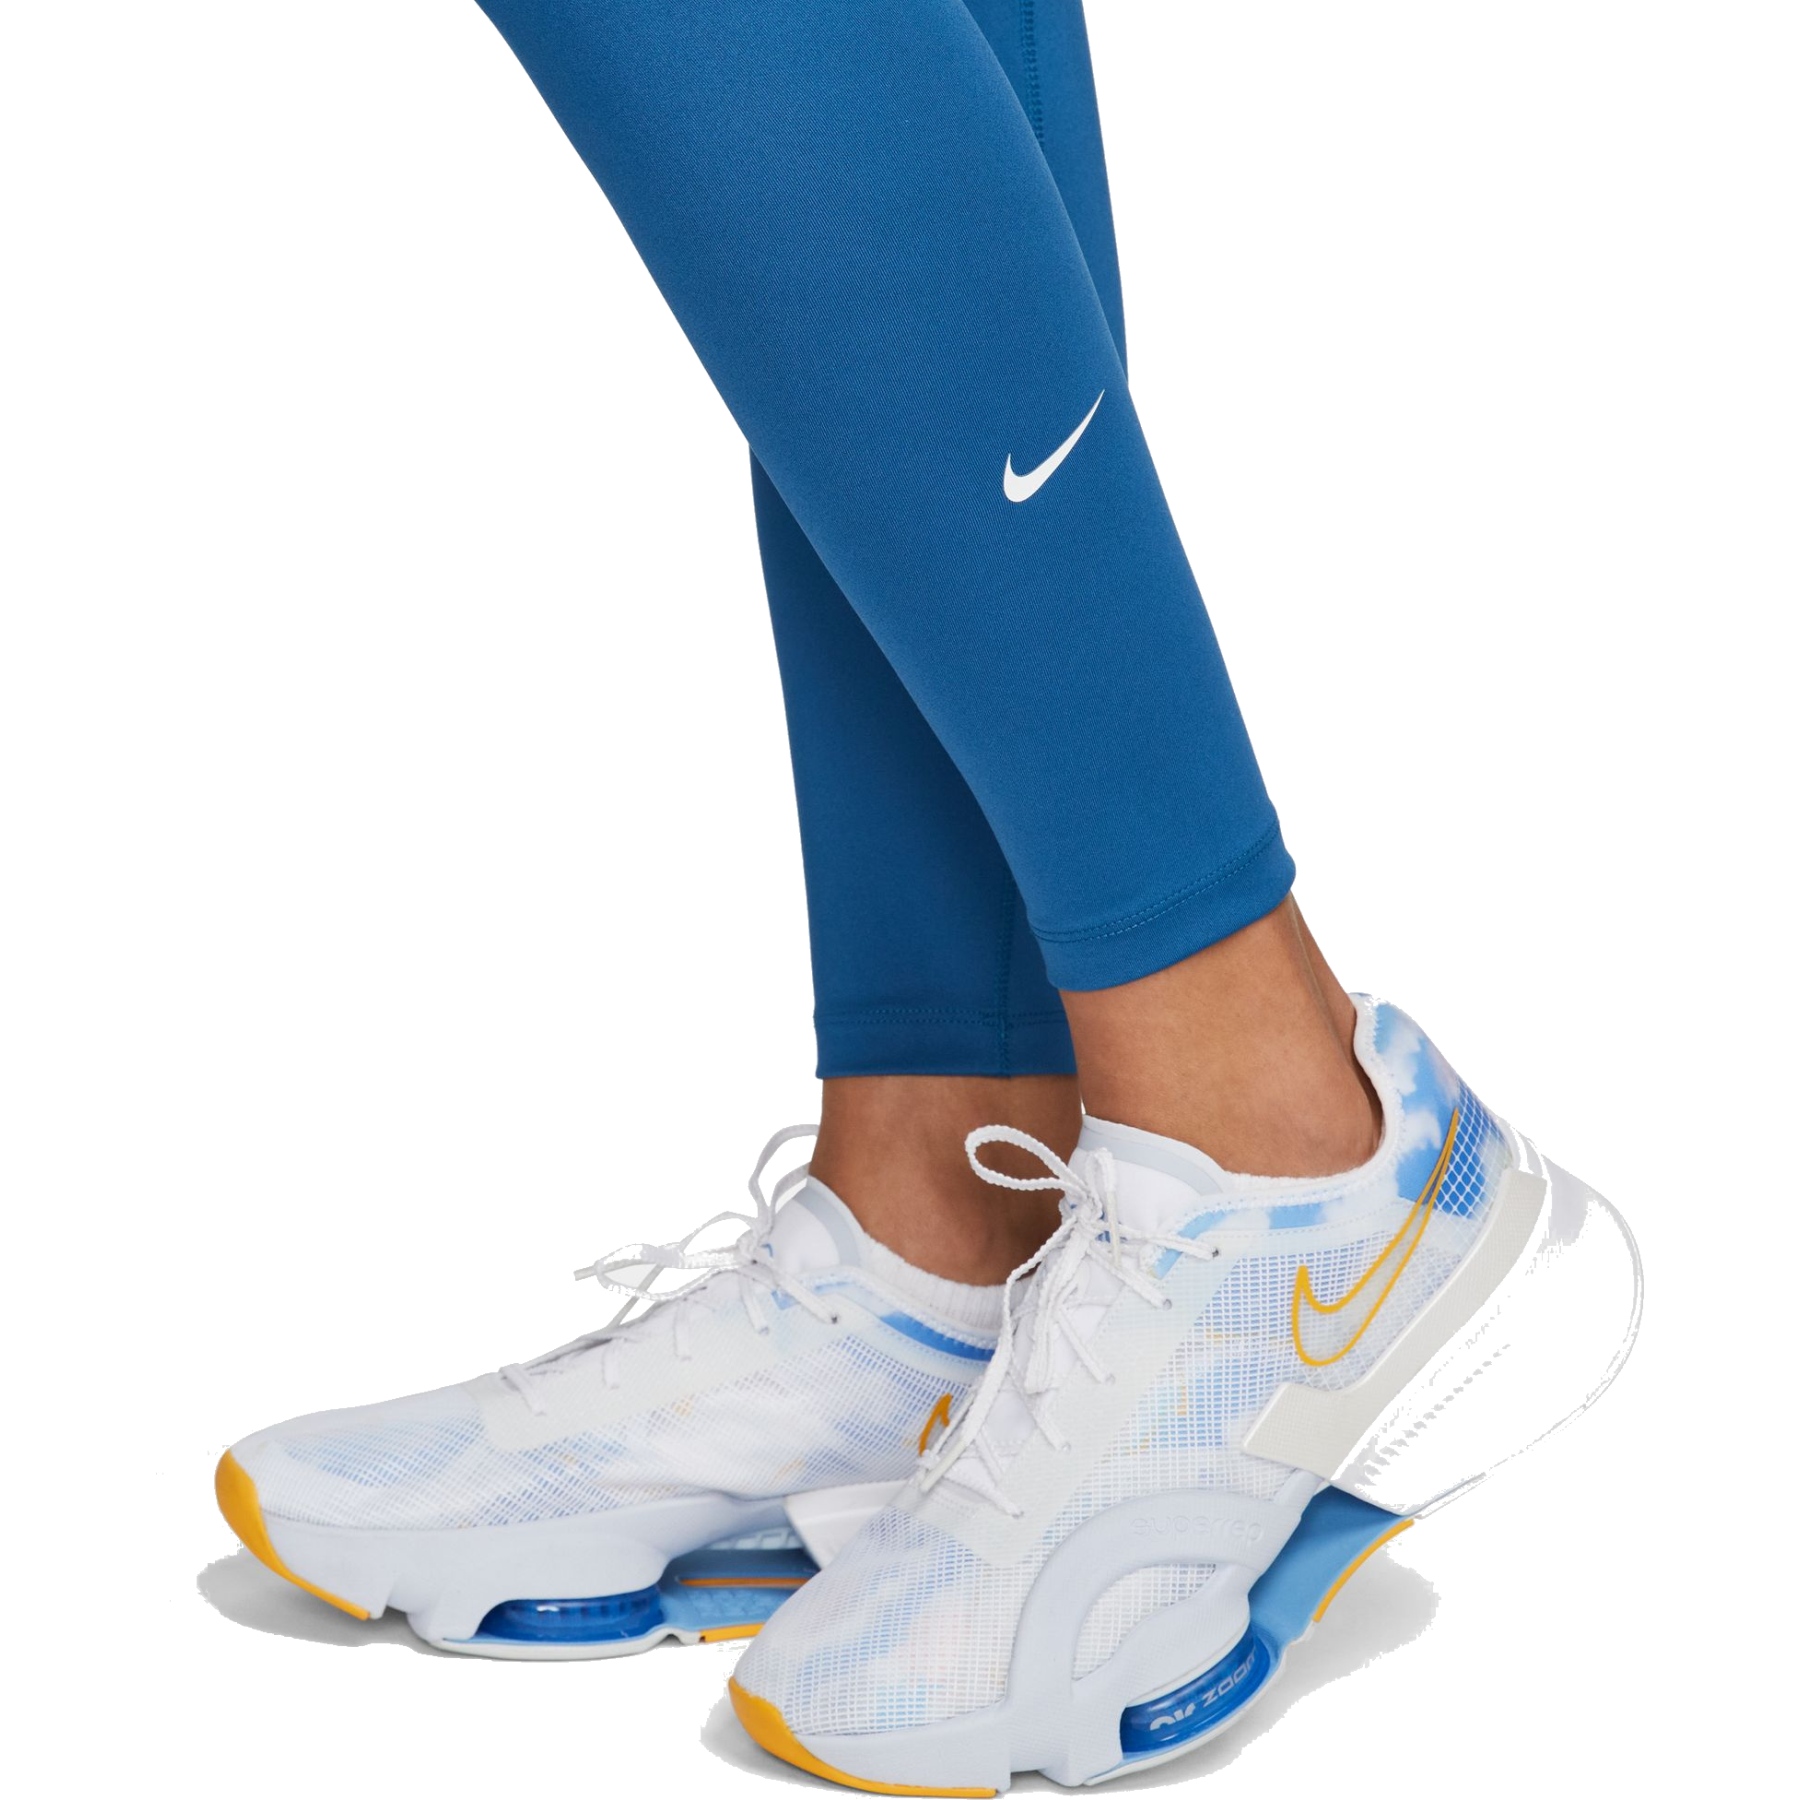 Nike One Dri-FIT Legging Dames 